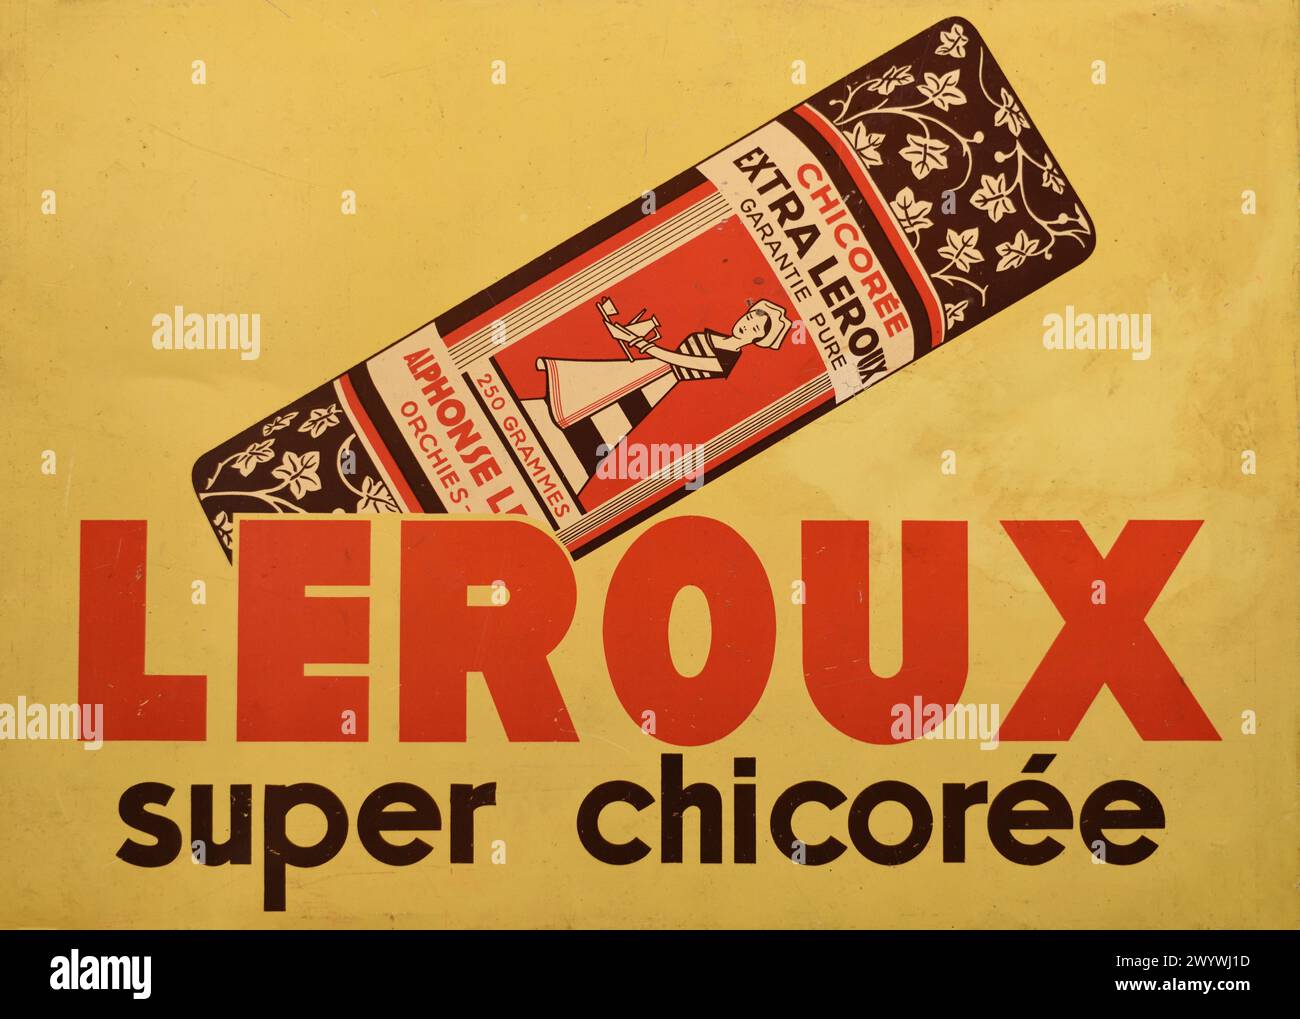 Leroux Chicory Stock Photo